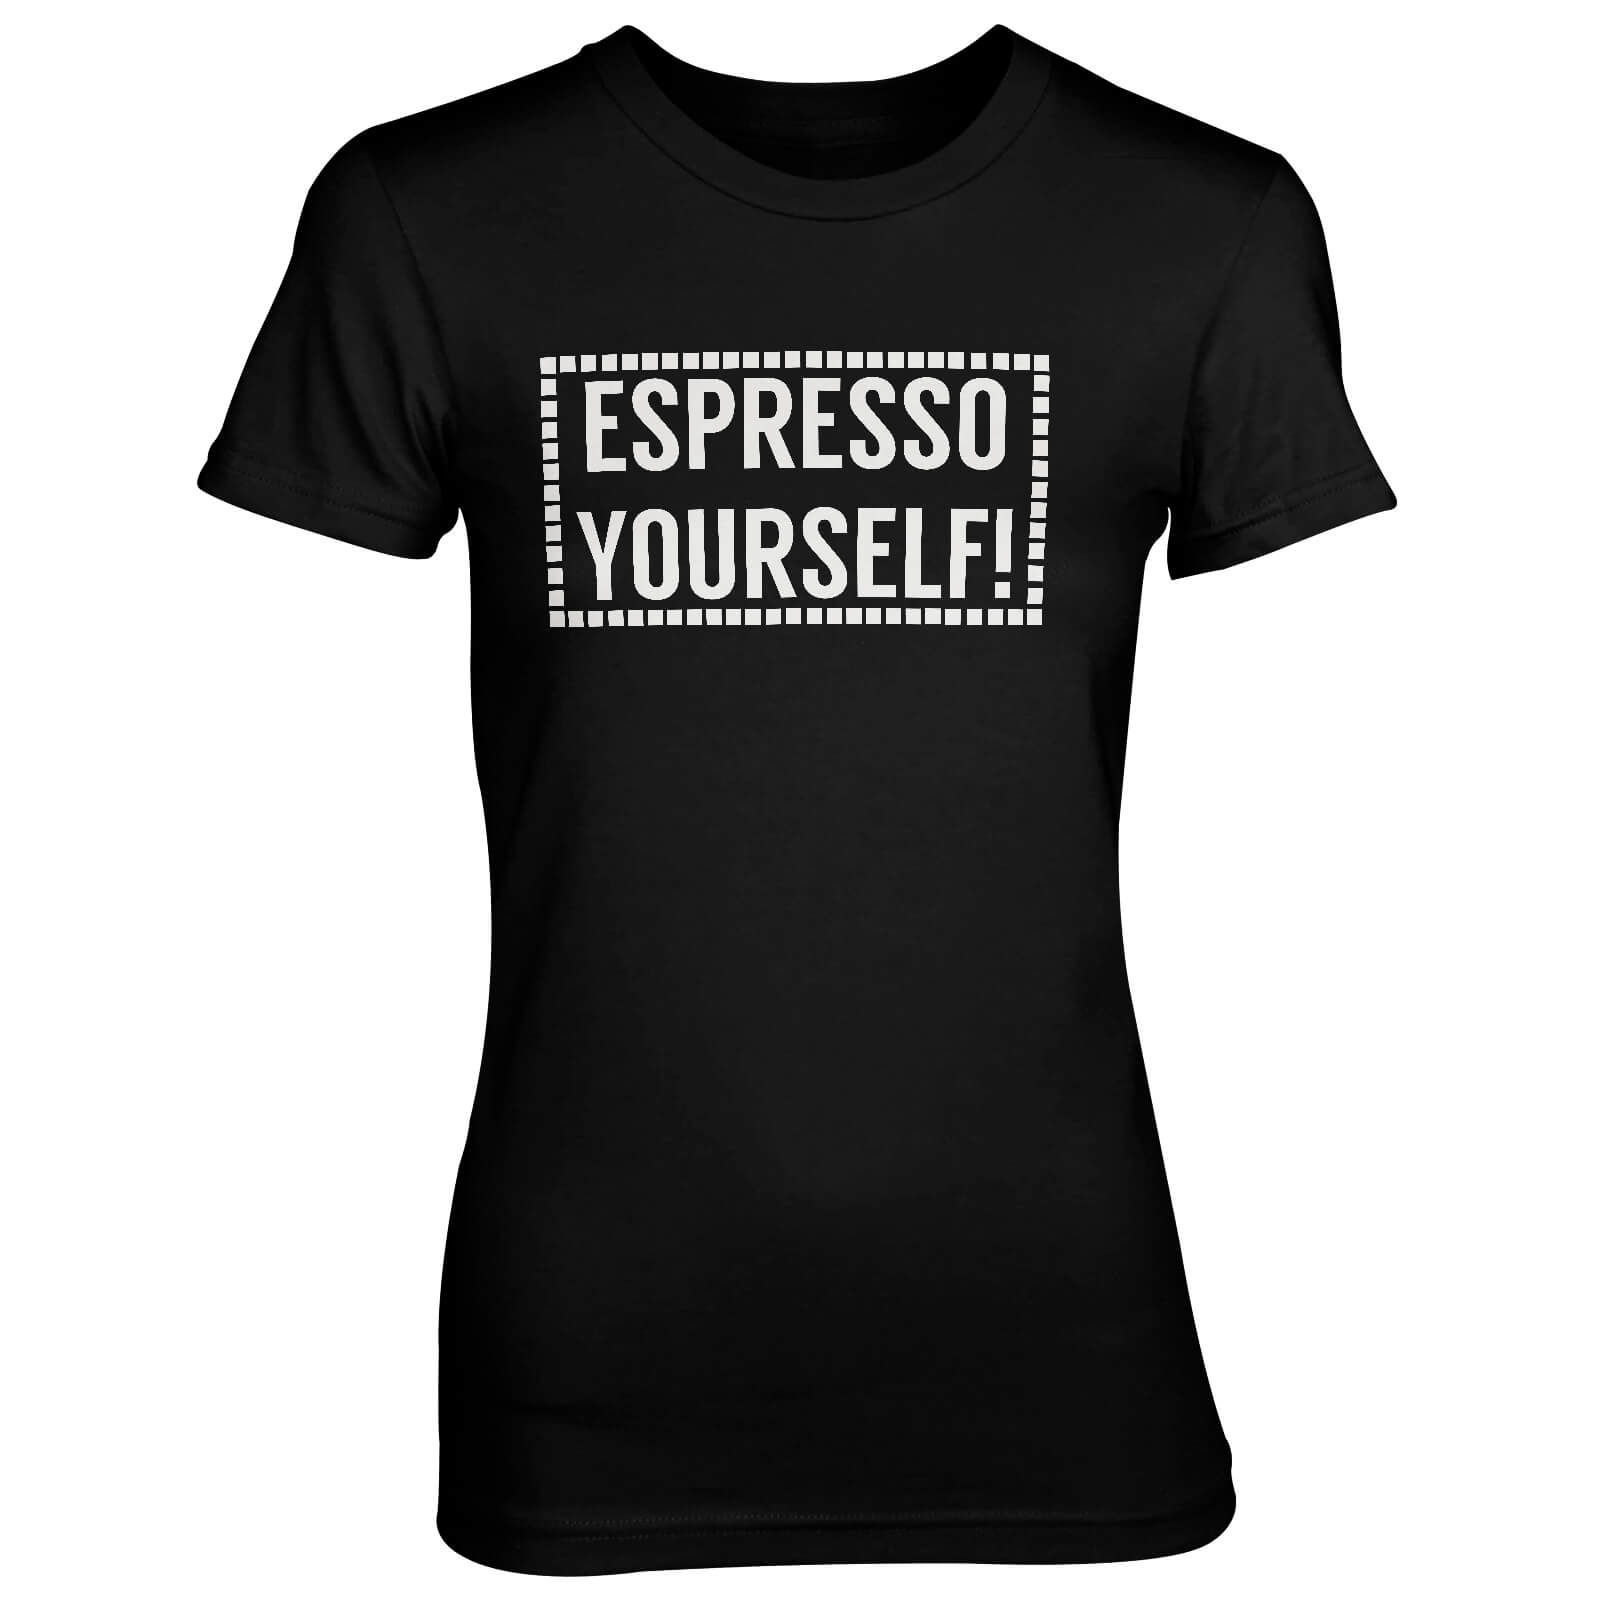 Espresso Yourself! Women's Black T-Shirt - S - Black